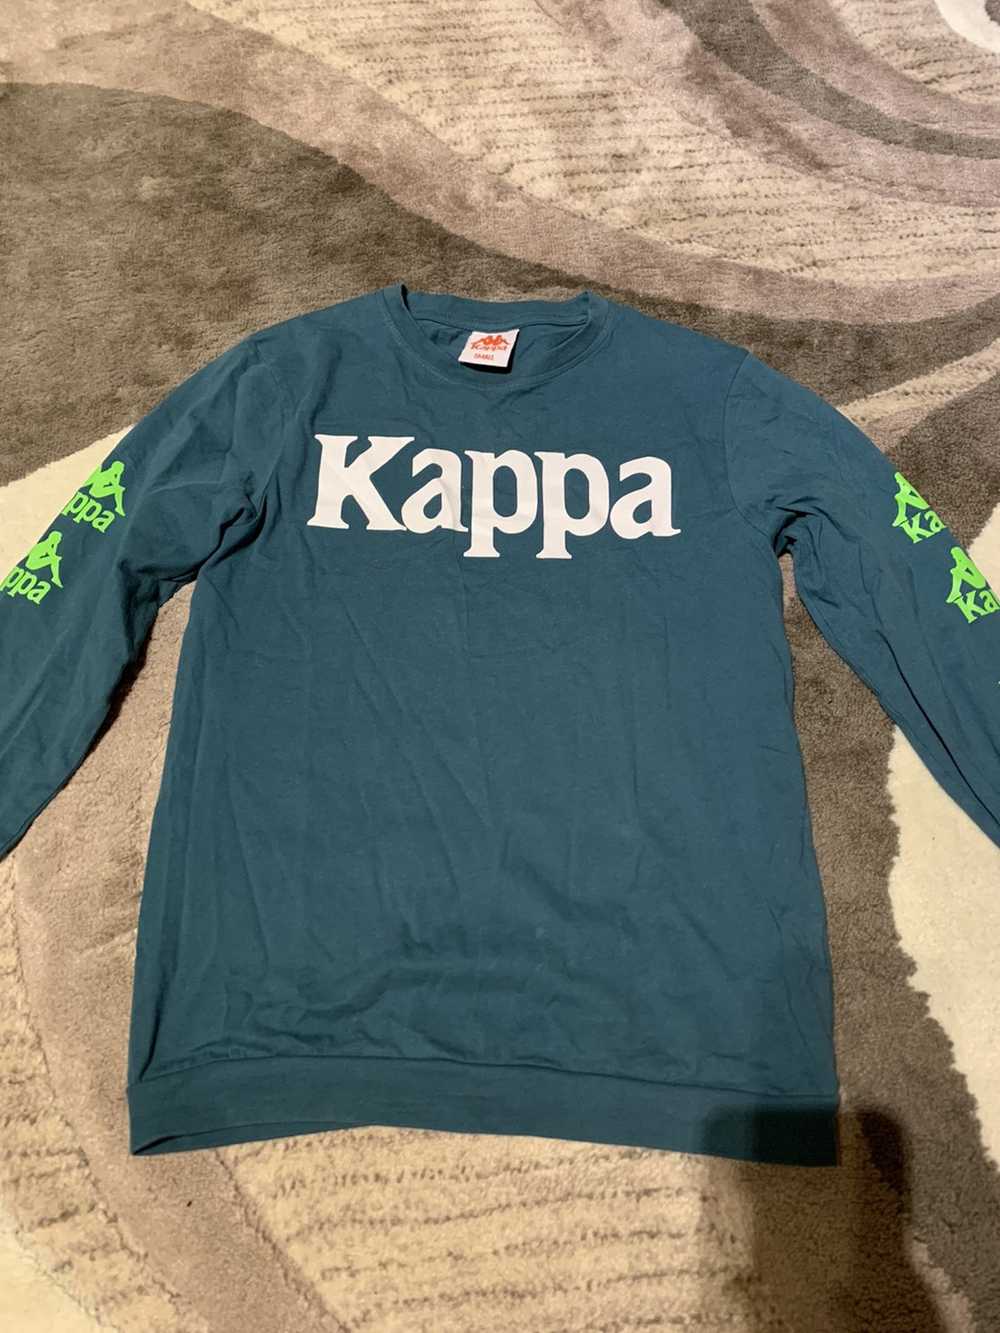 Kappa Authentic Kappa longsleeve T-shirt - image 1